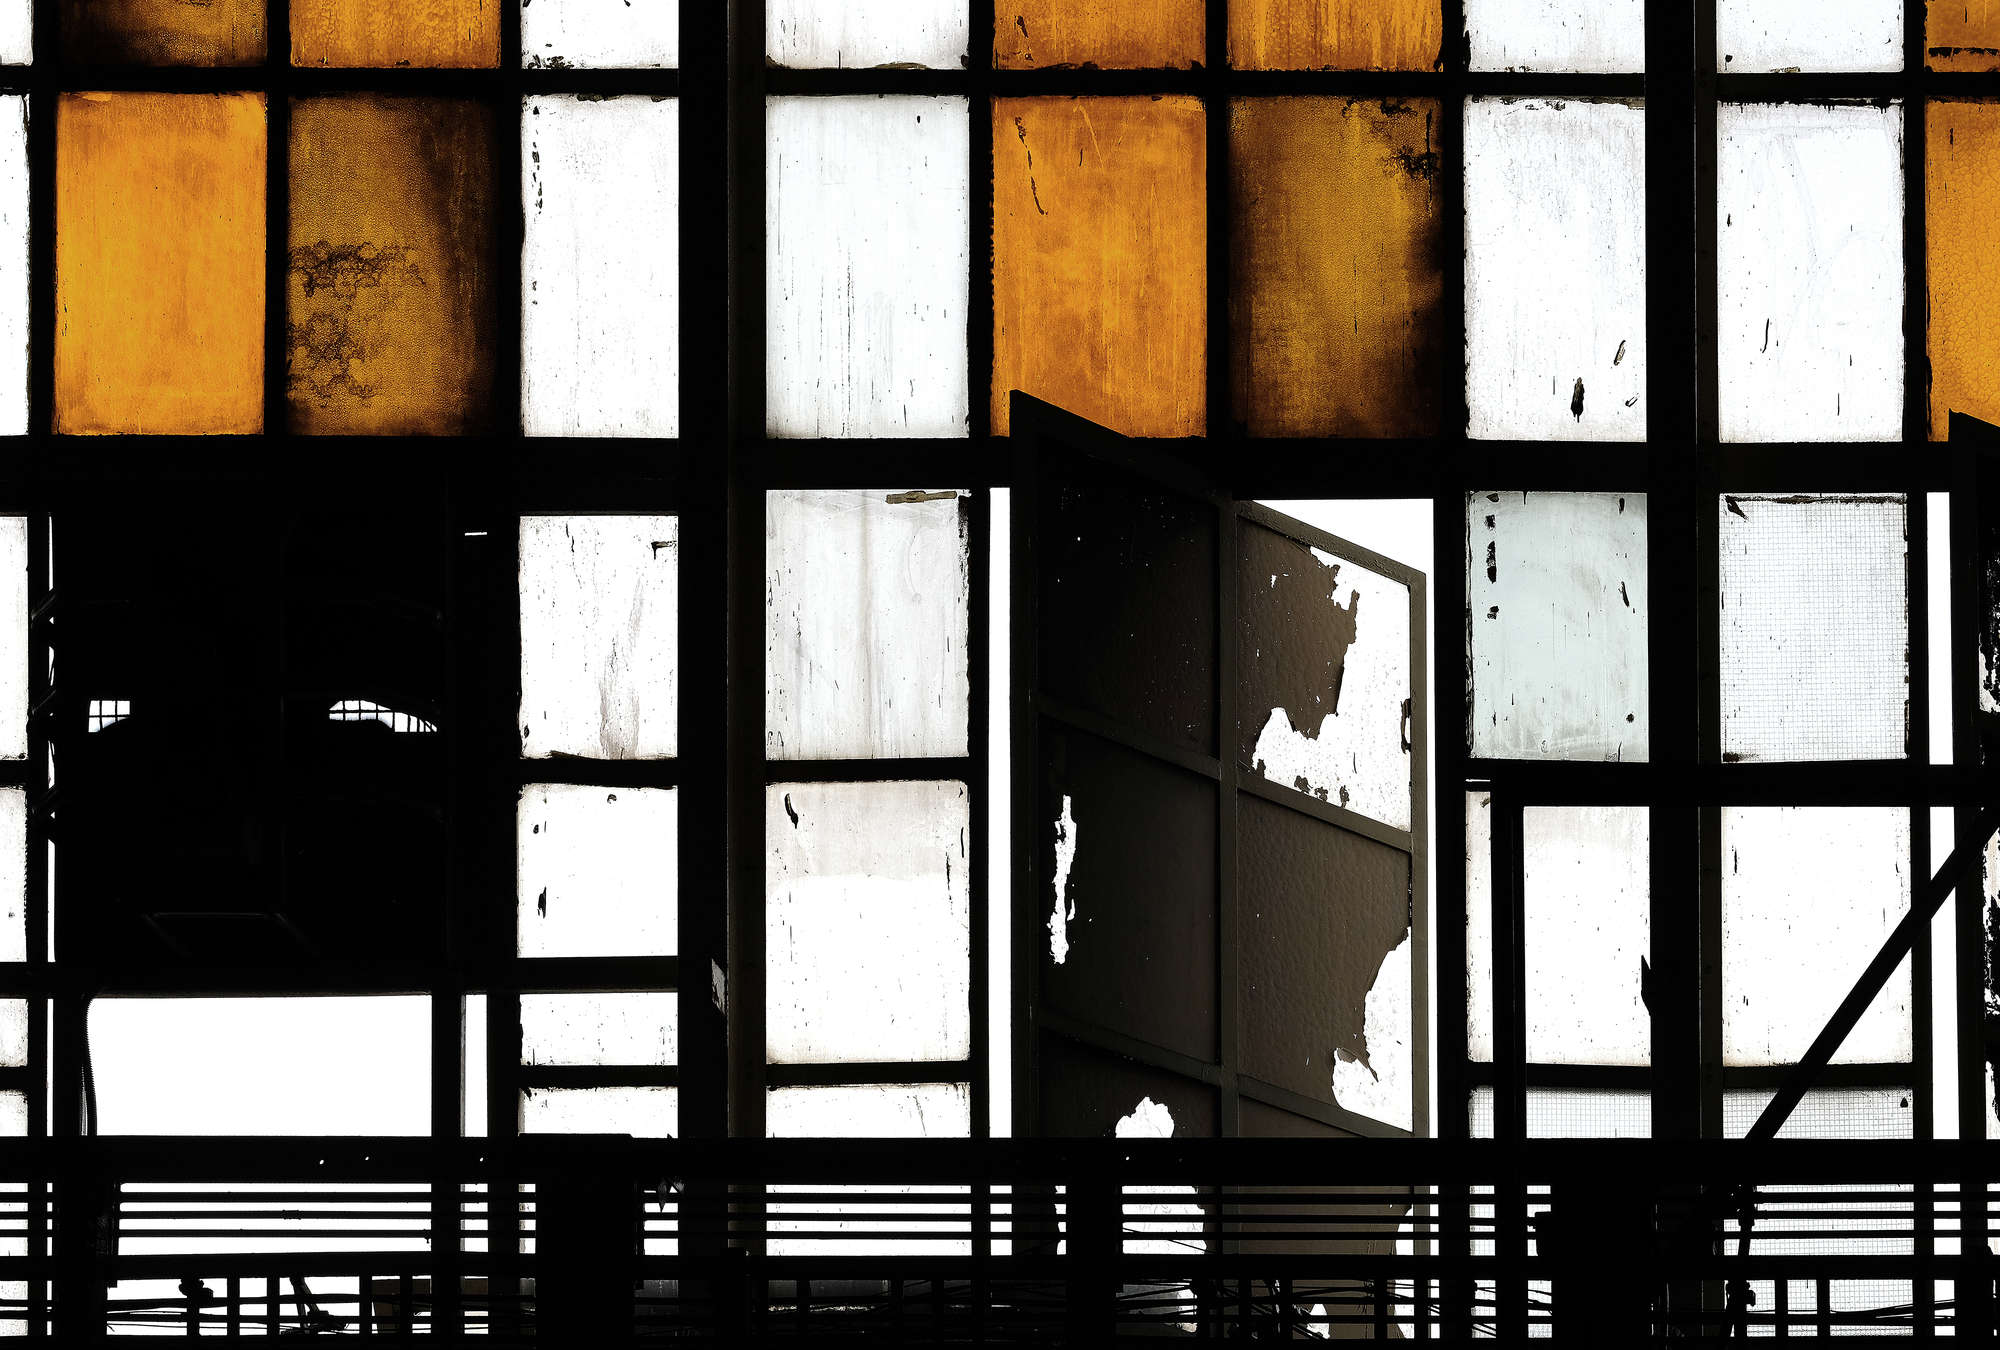             Bronx 2 - Photo wallpaper, Loft with stained glass windows - Orange, Black | Matt smooth fleece
        